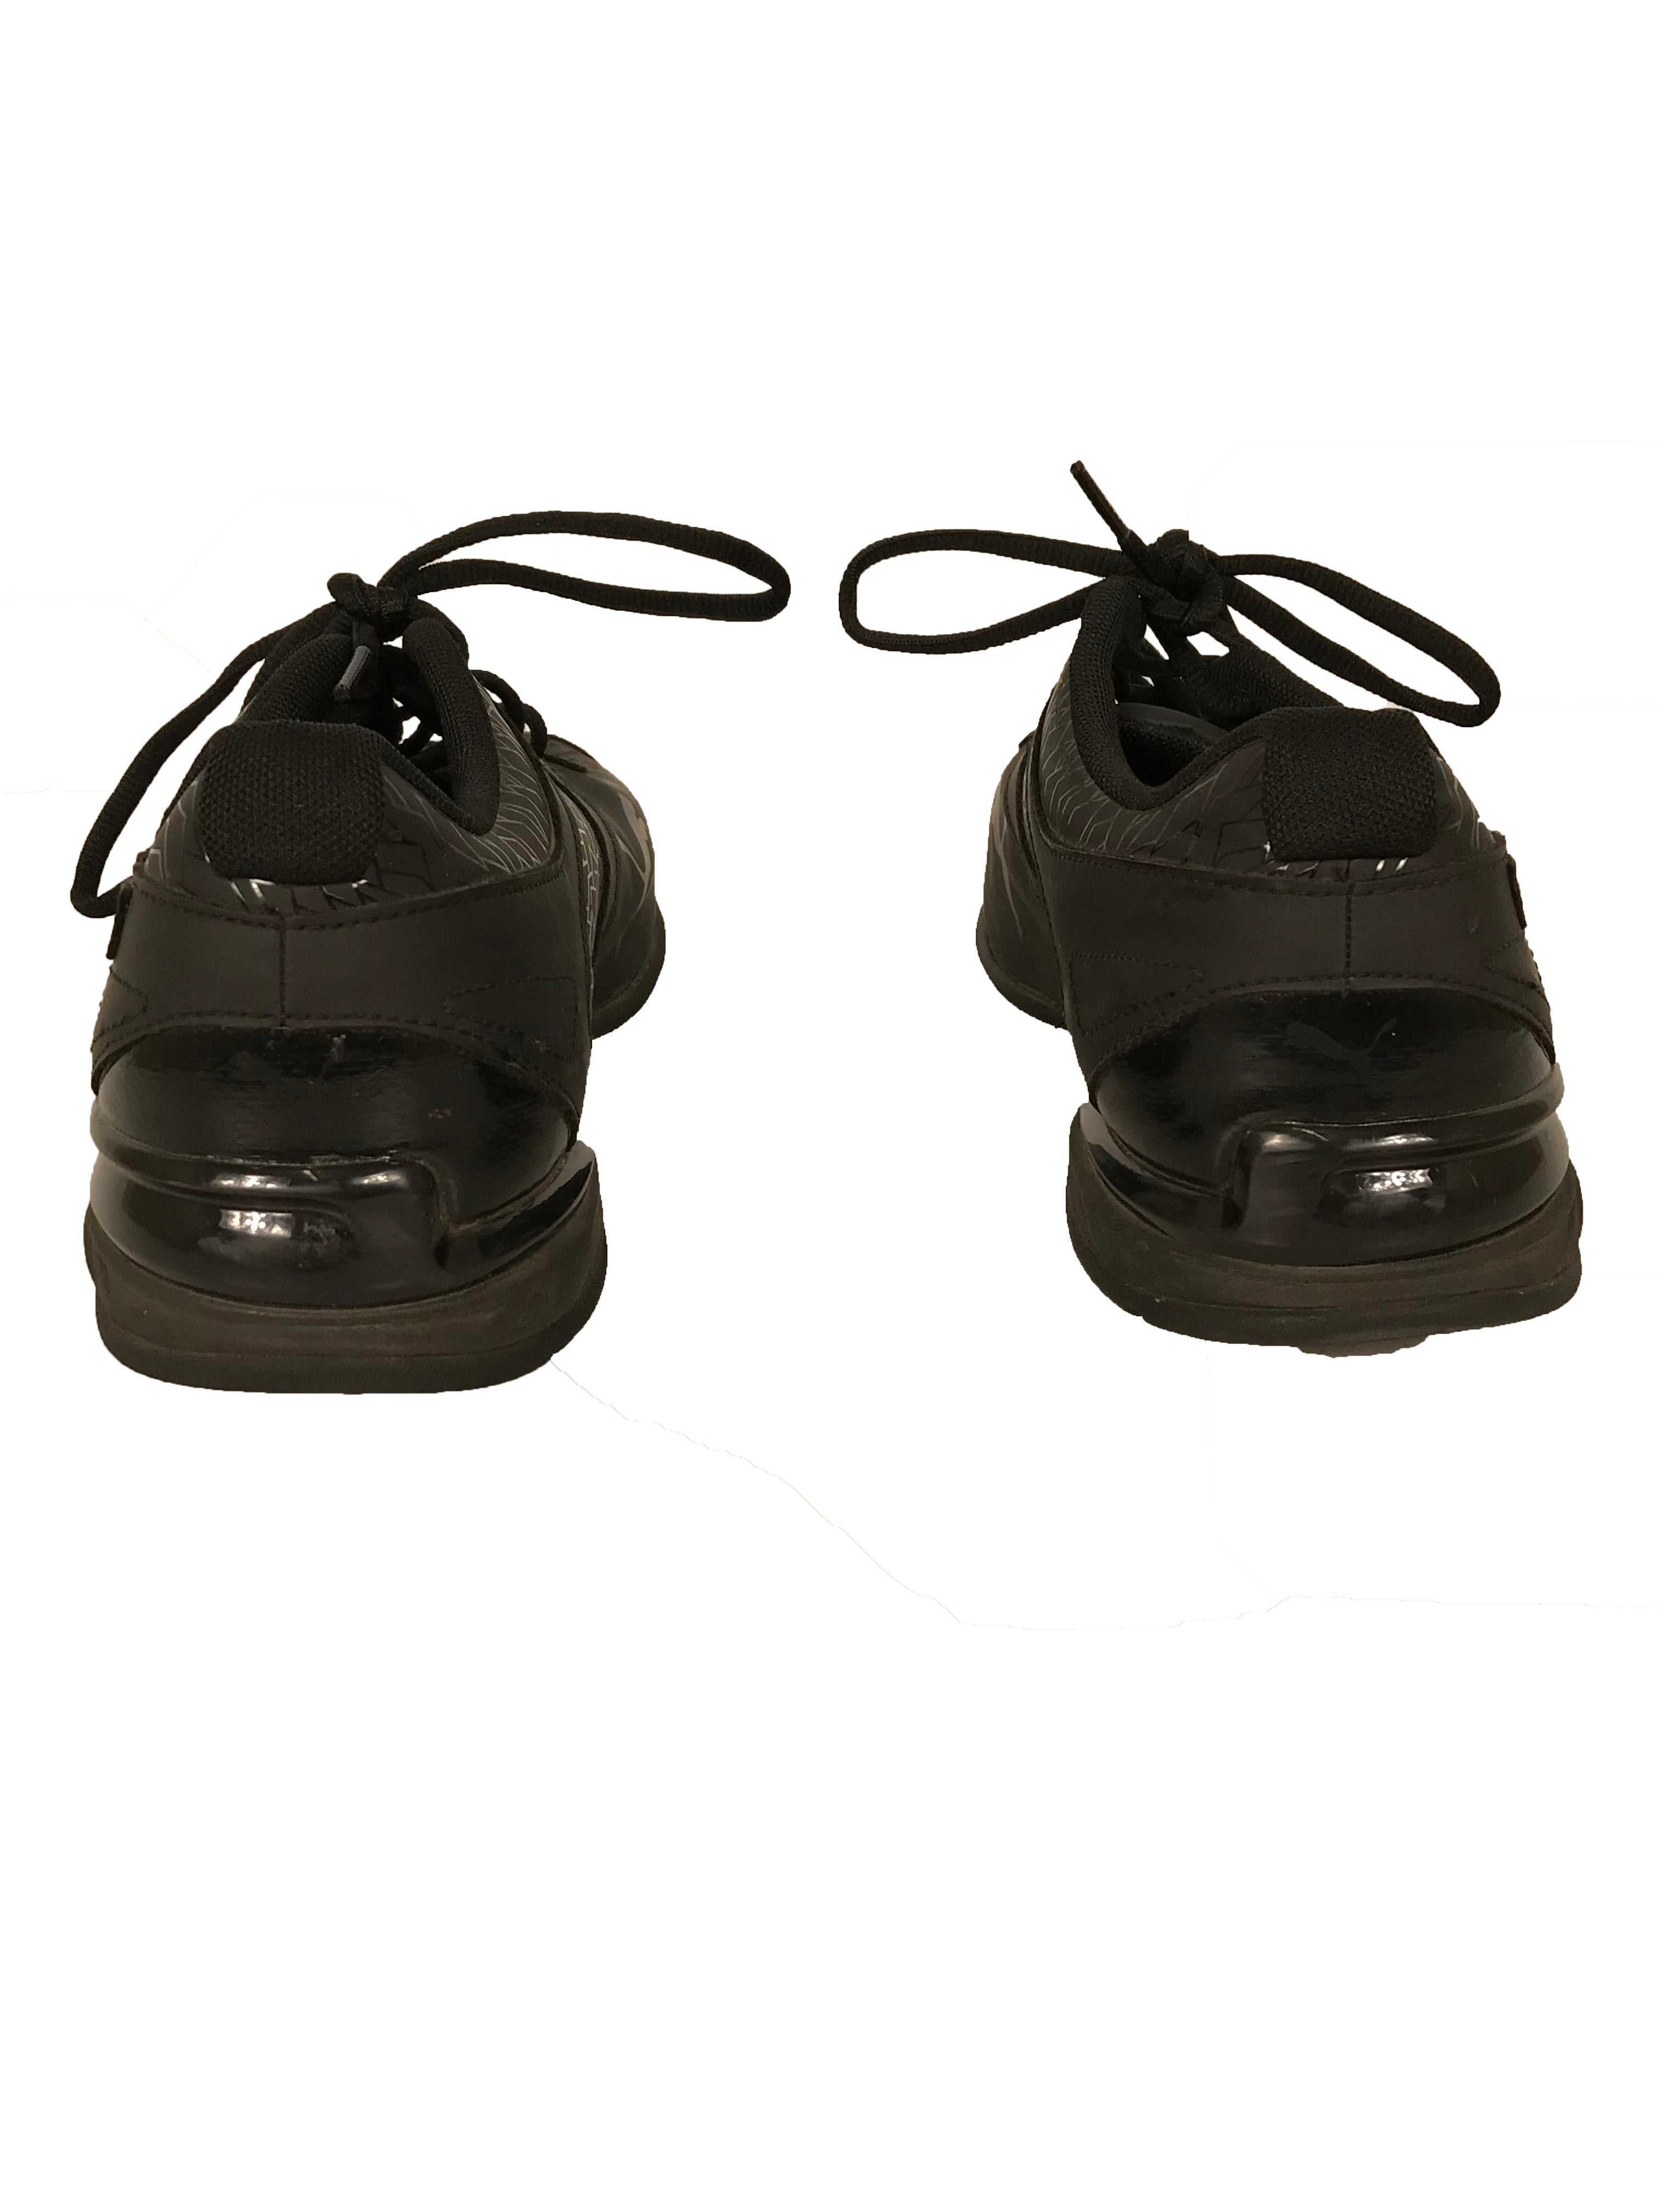 Puma Black Tazon 6 Fracture Sneakers Men's Size 10.5